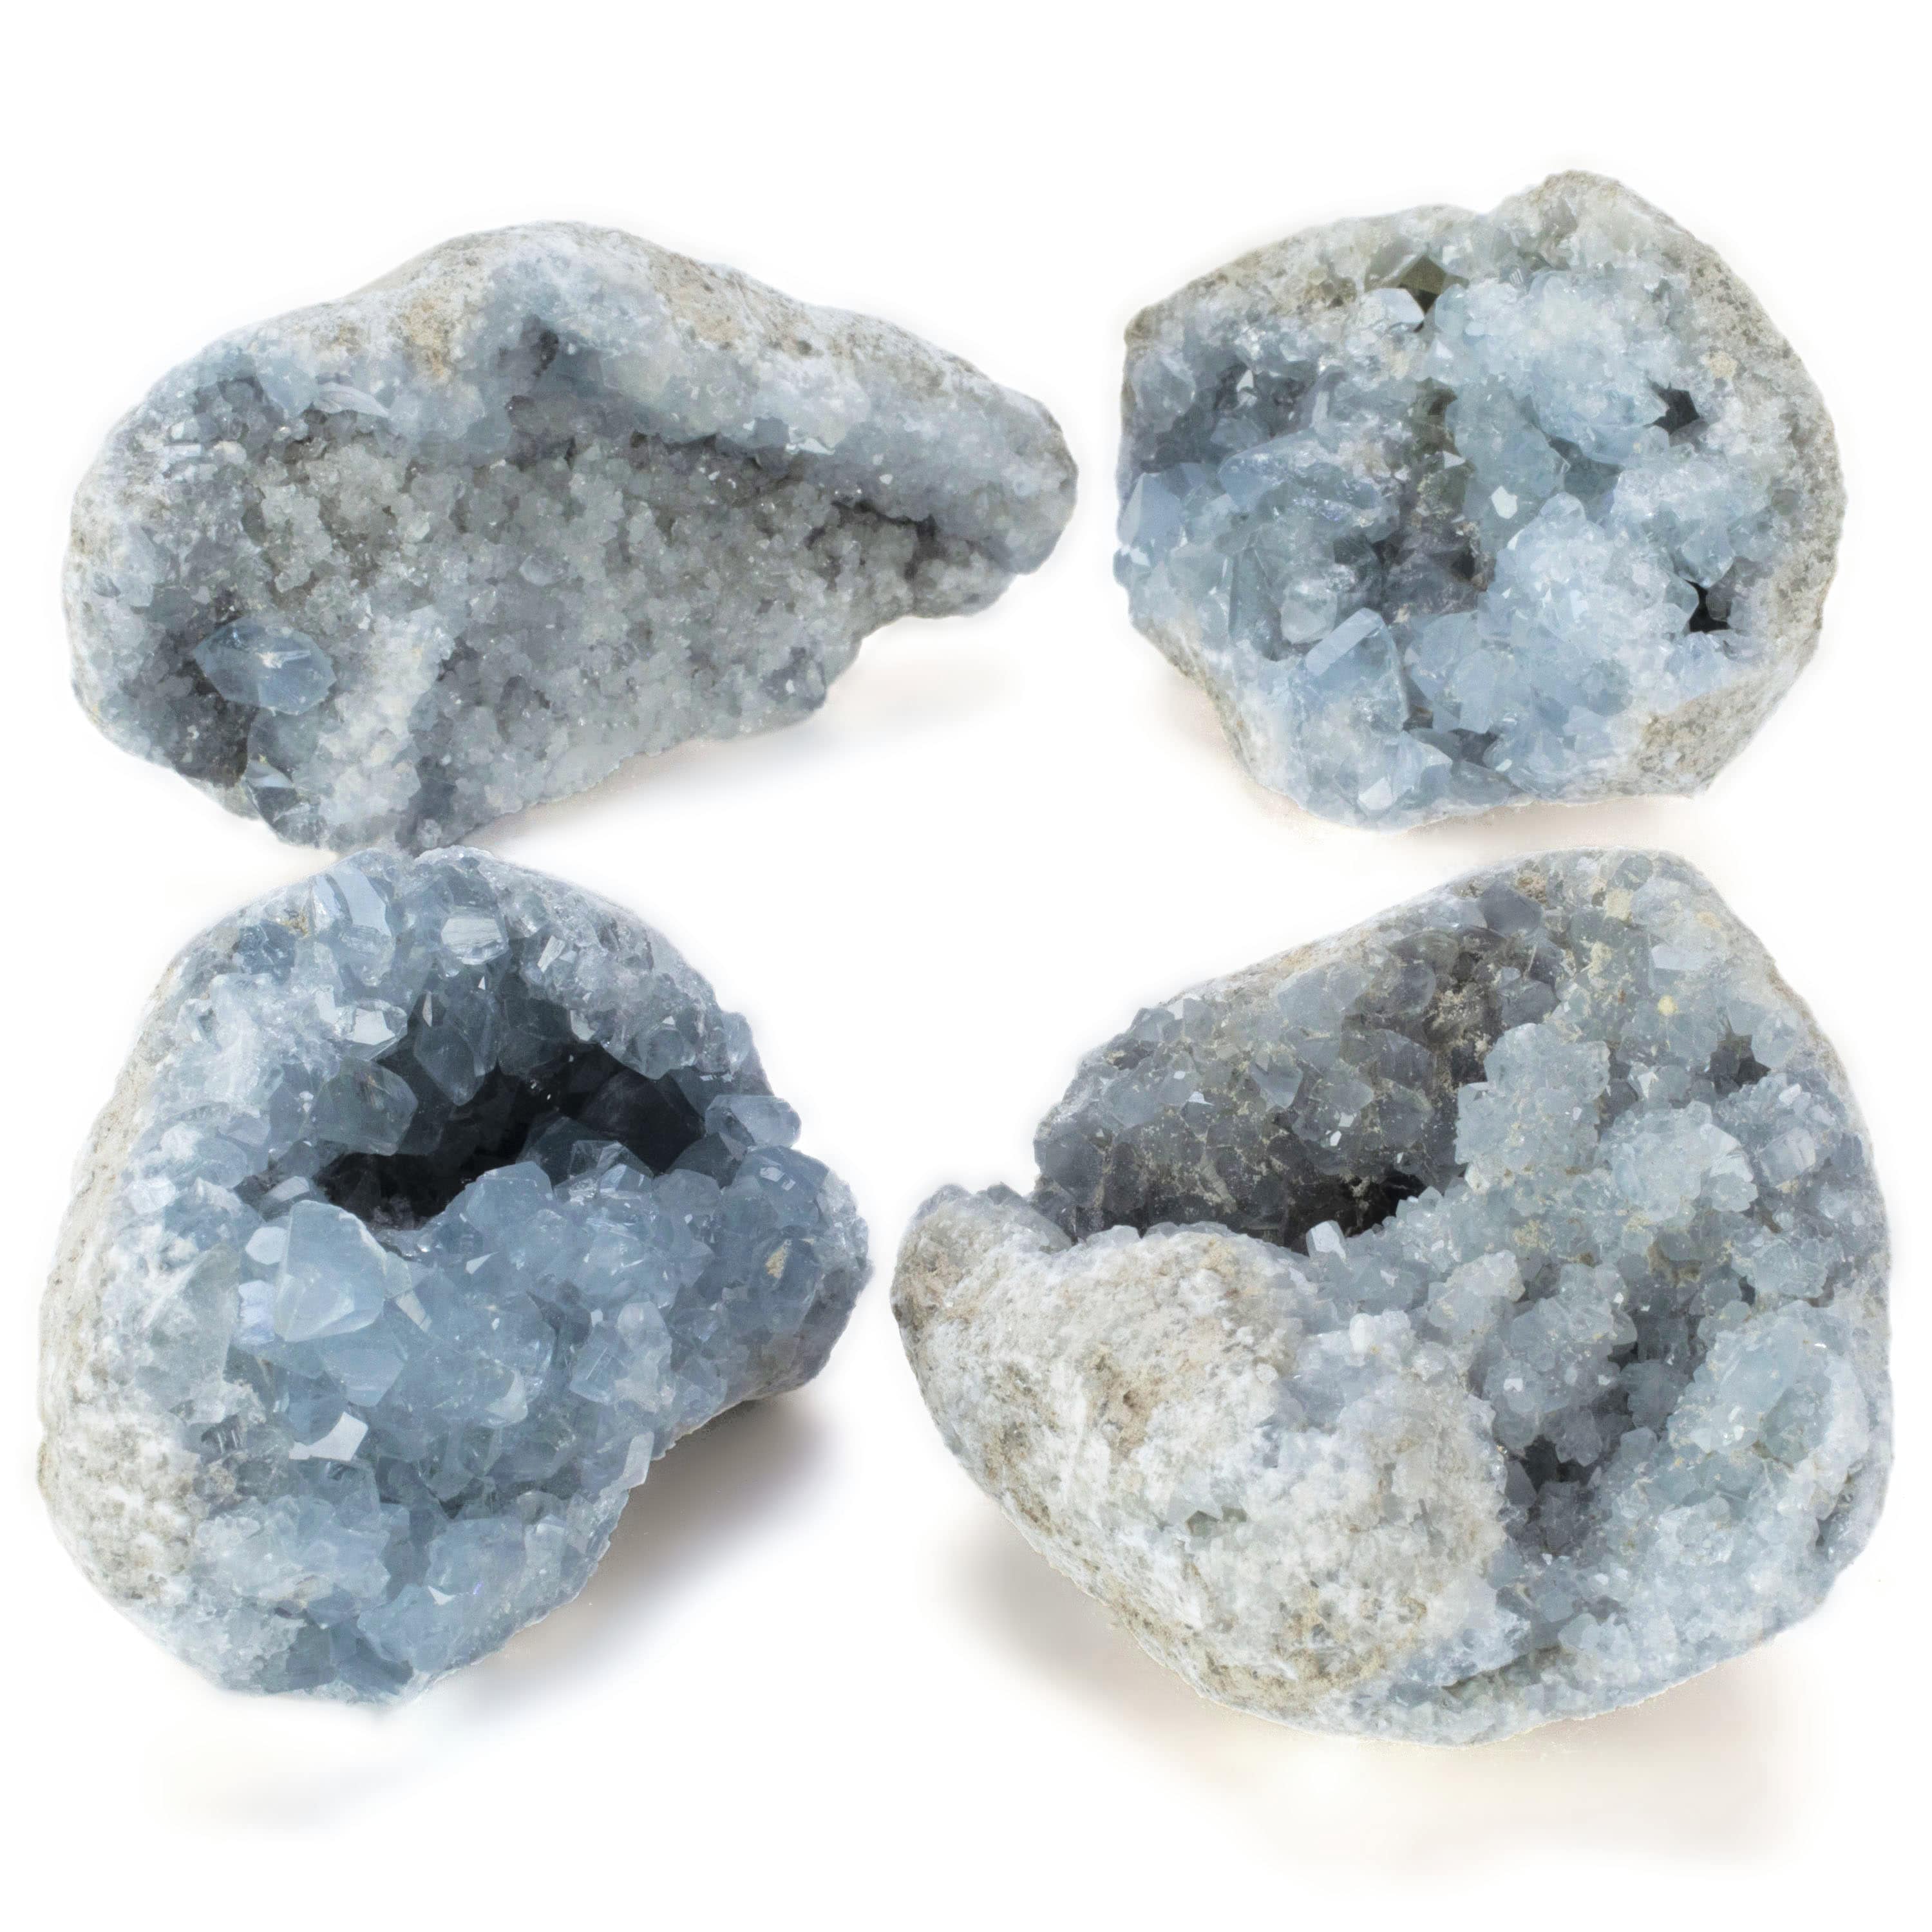 Kalifano Celestite Natural Celestite Crystal Cluster Geode - 3.5 in. CG260